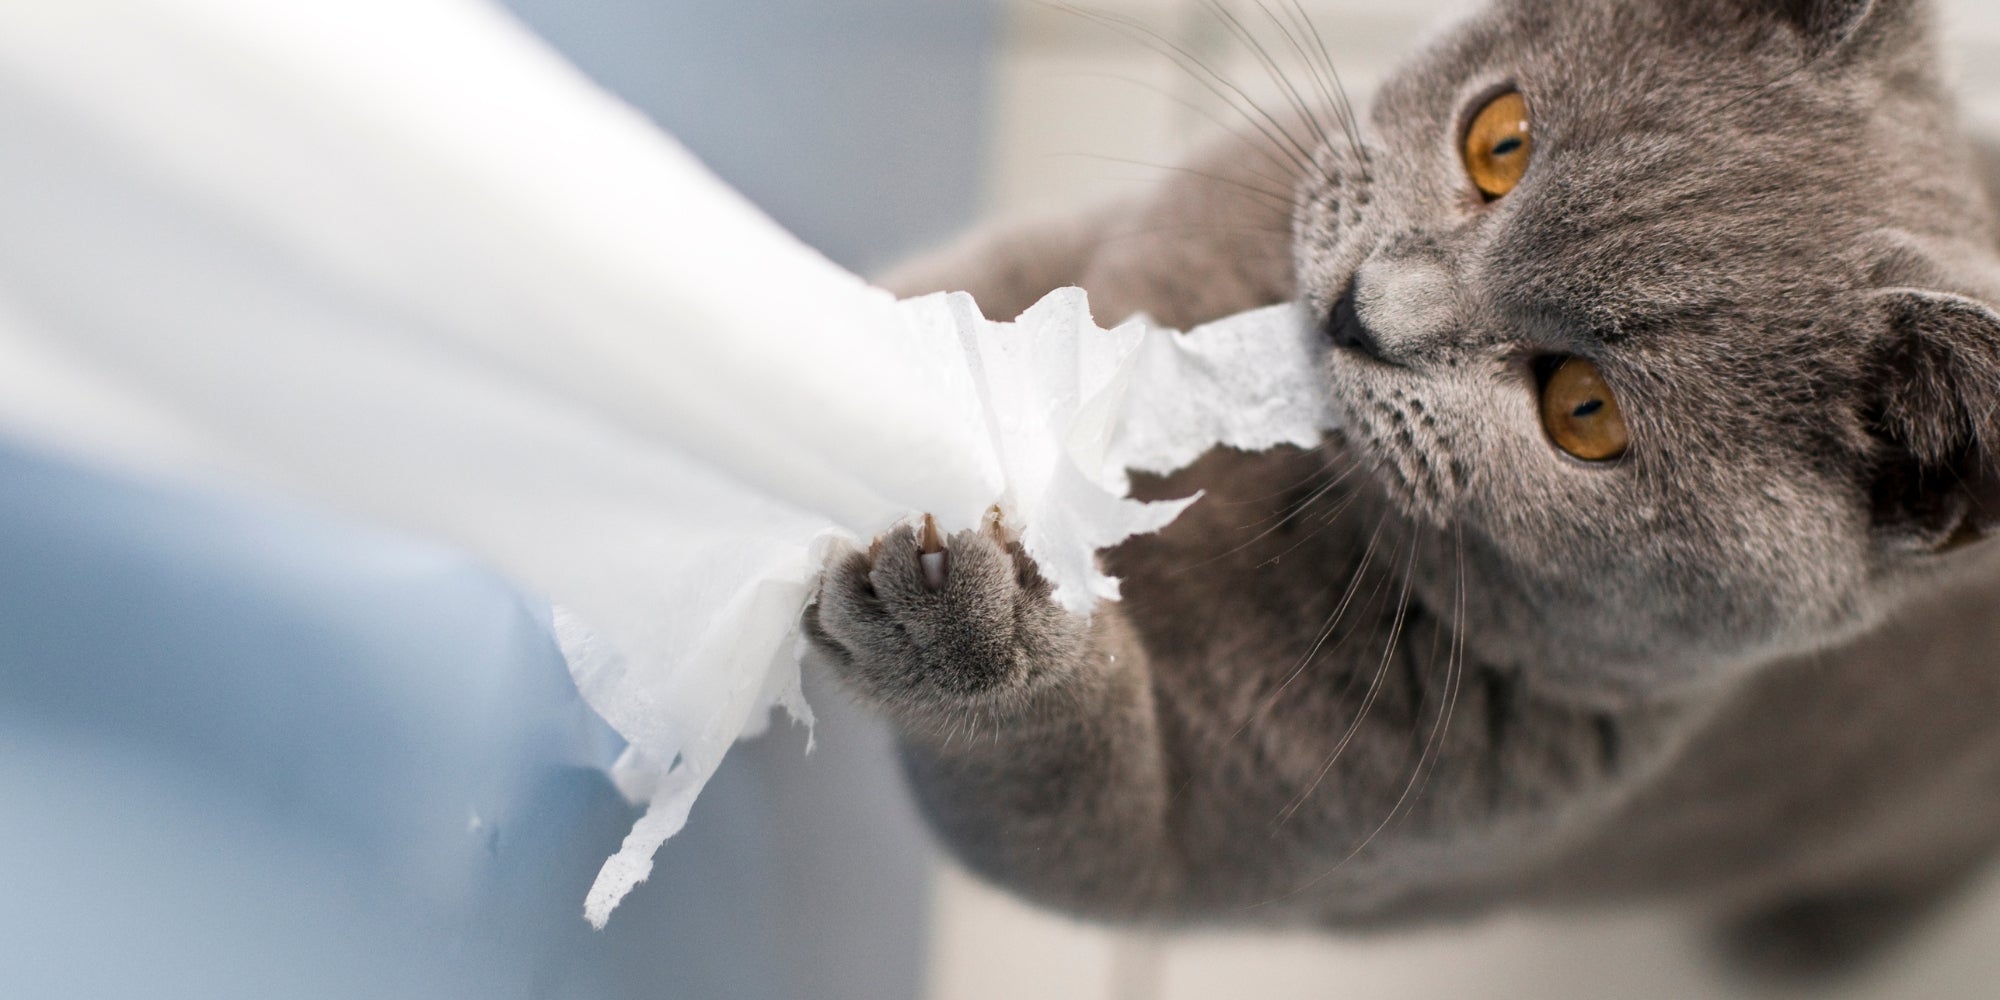 Gato travieso gatito británico de pelo corto rasgando papel higiénico con las garras